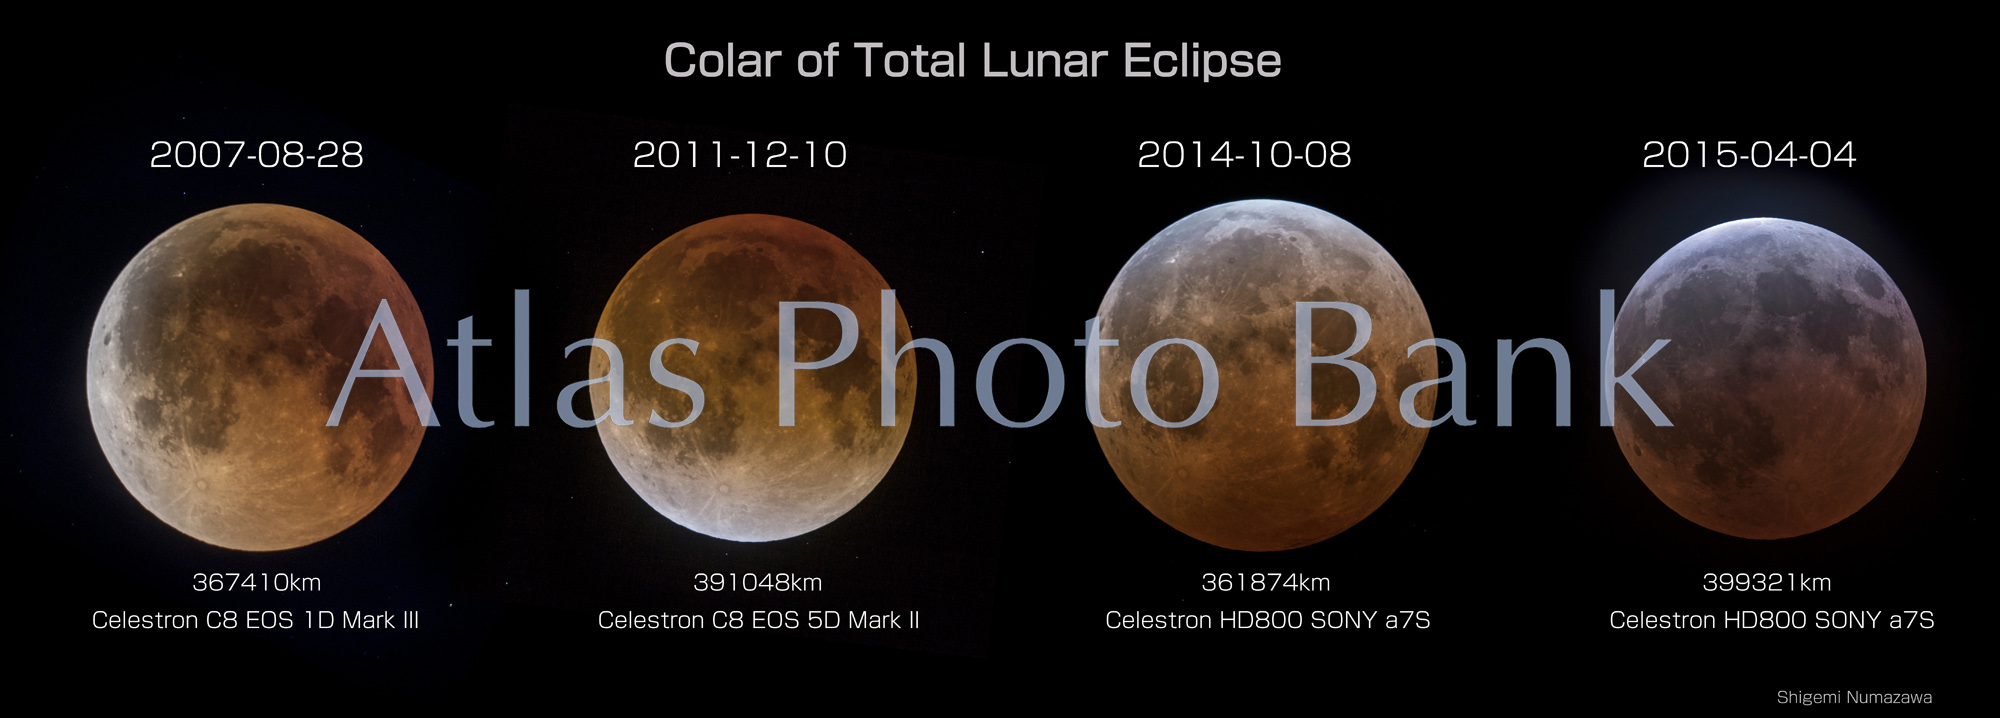 EEP-185-毎回異なる皆既月食の色